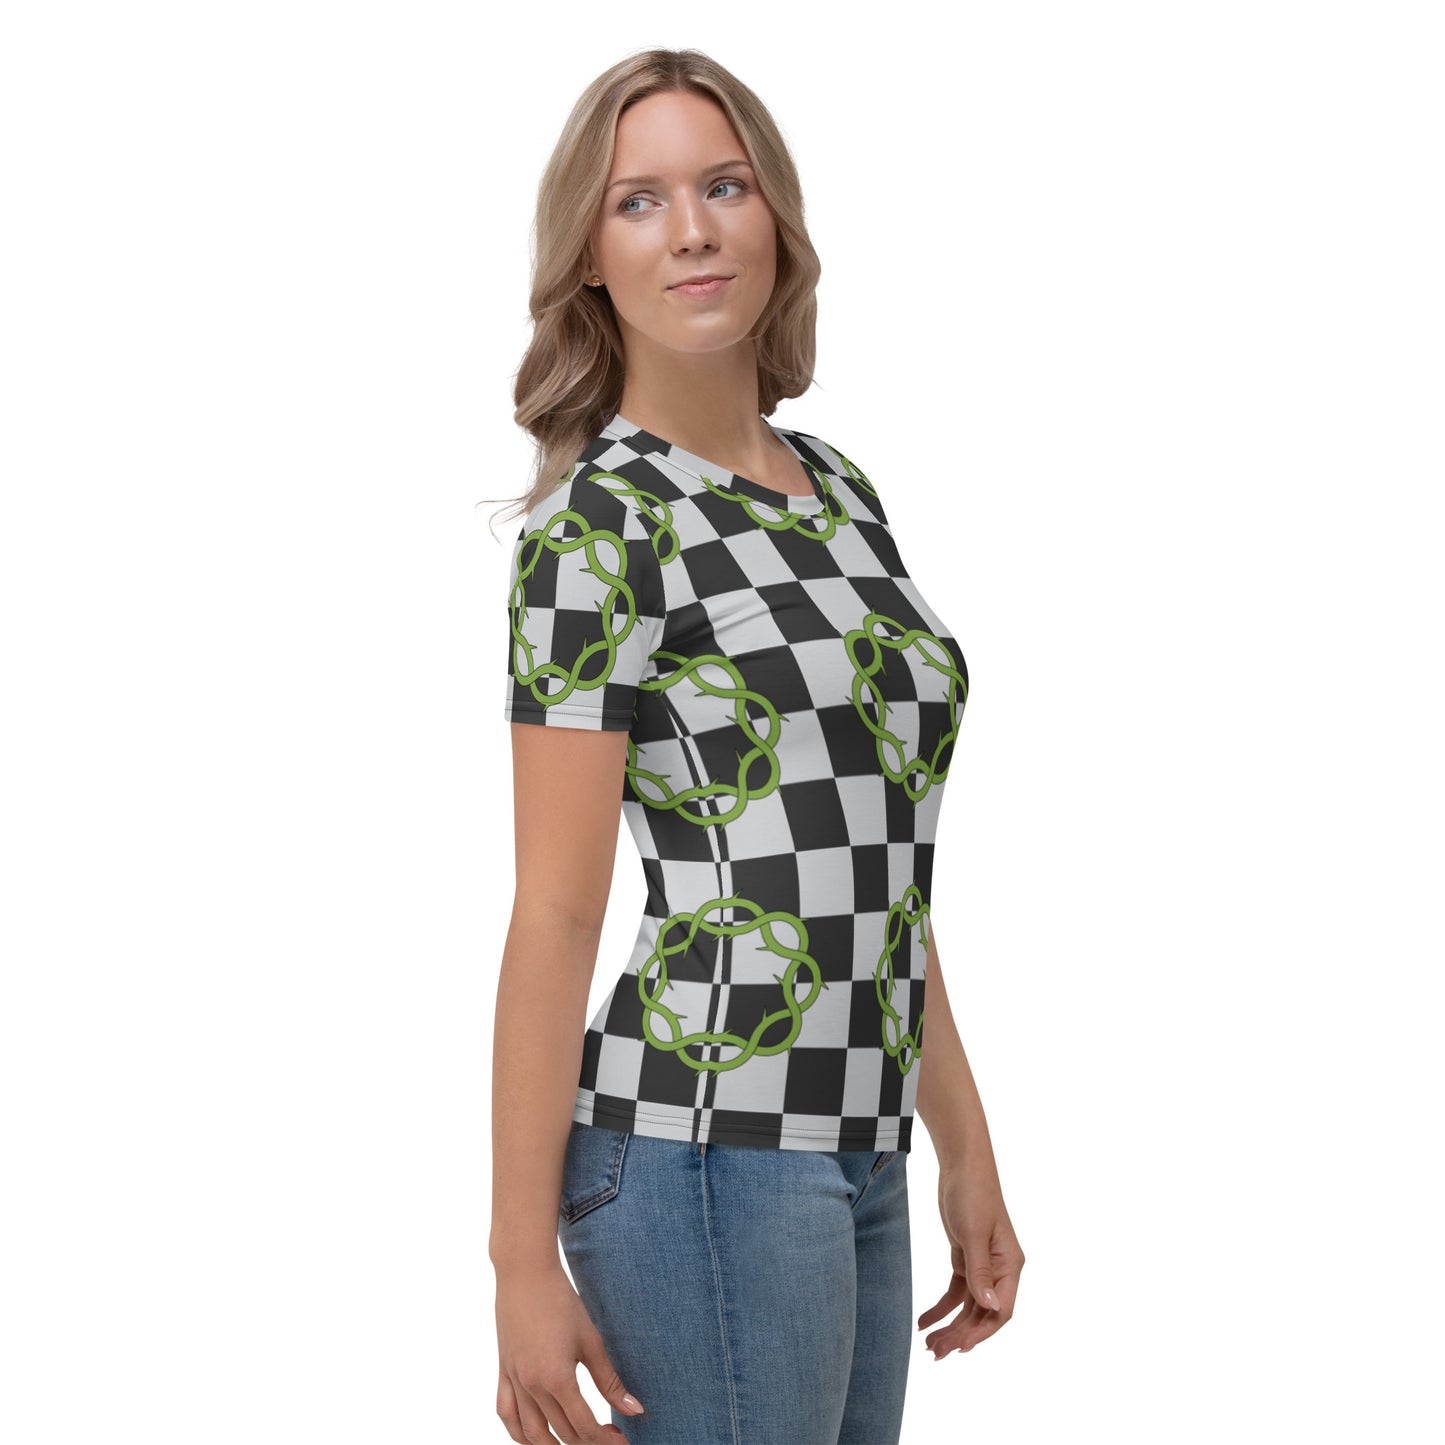 Toarnen Gamer Moment Checked Pattern - Women's T-shirt